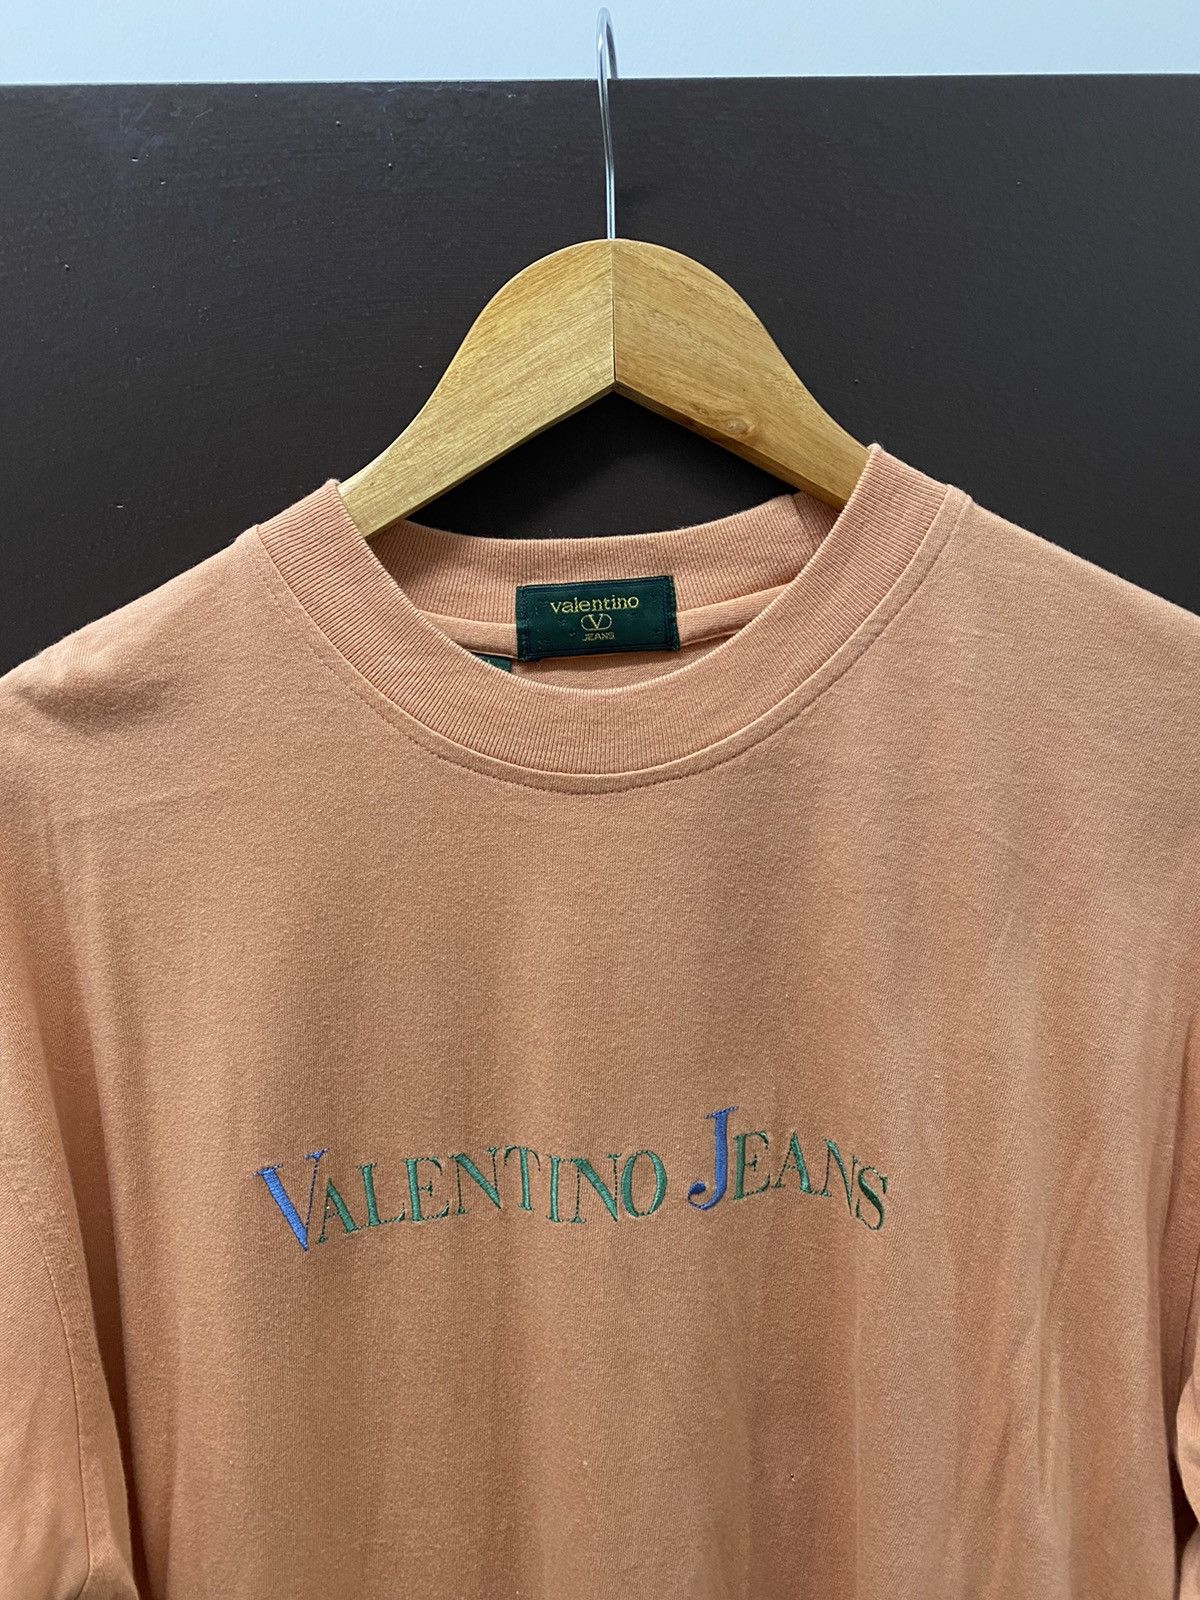 Vintage Valentino Jeans 1990 Logo T- Shirt - 7